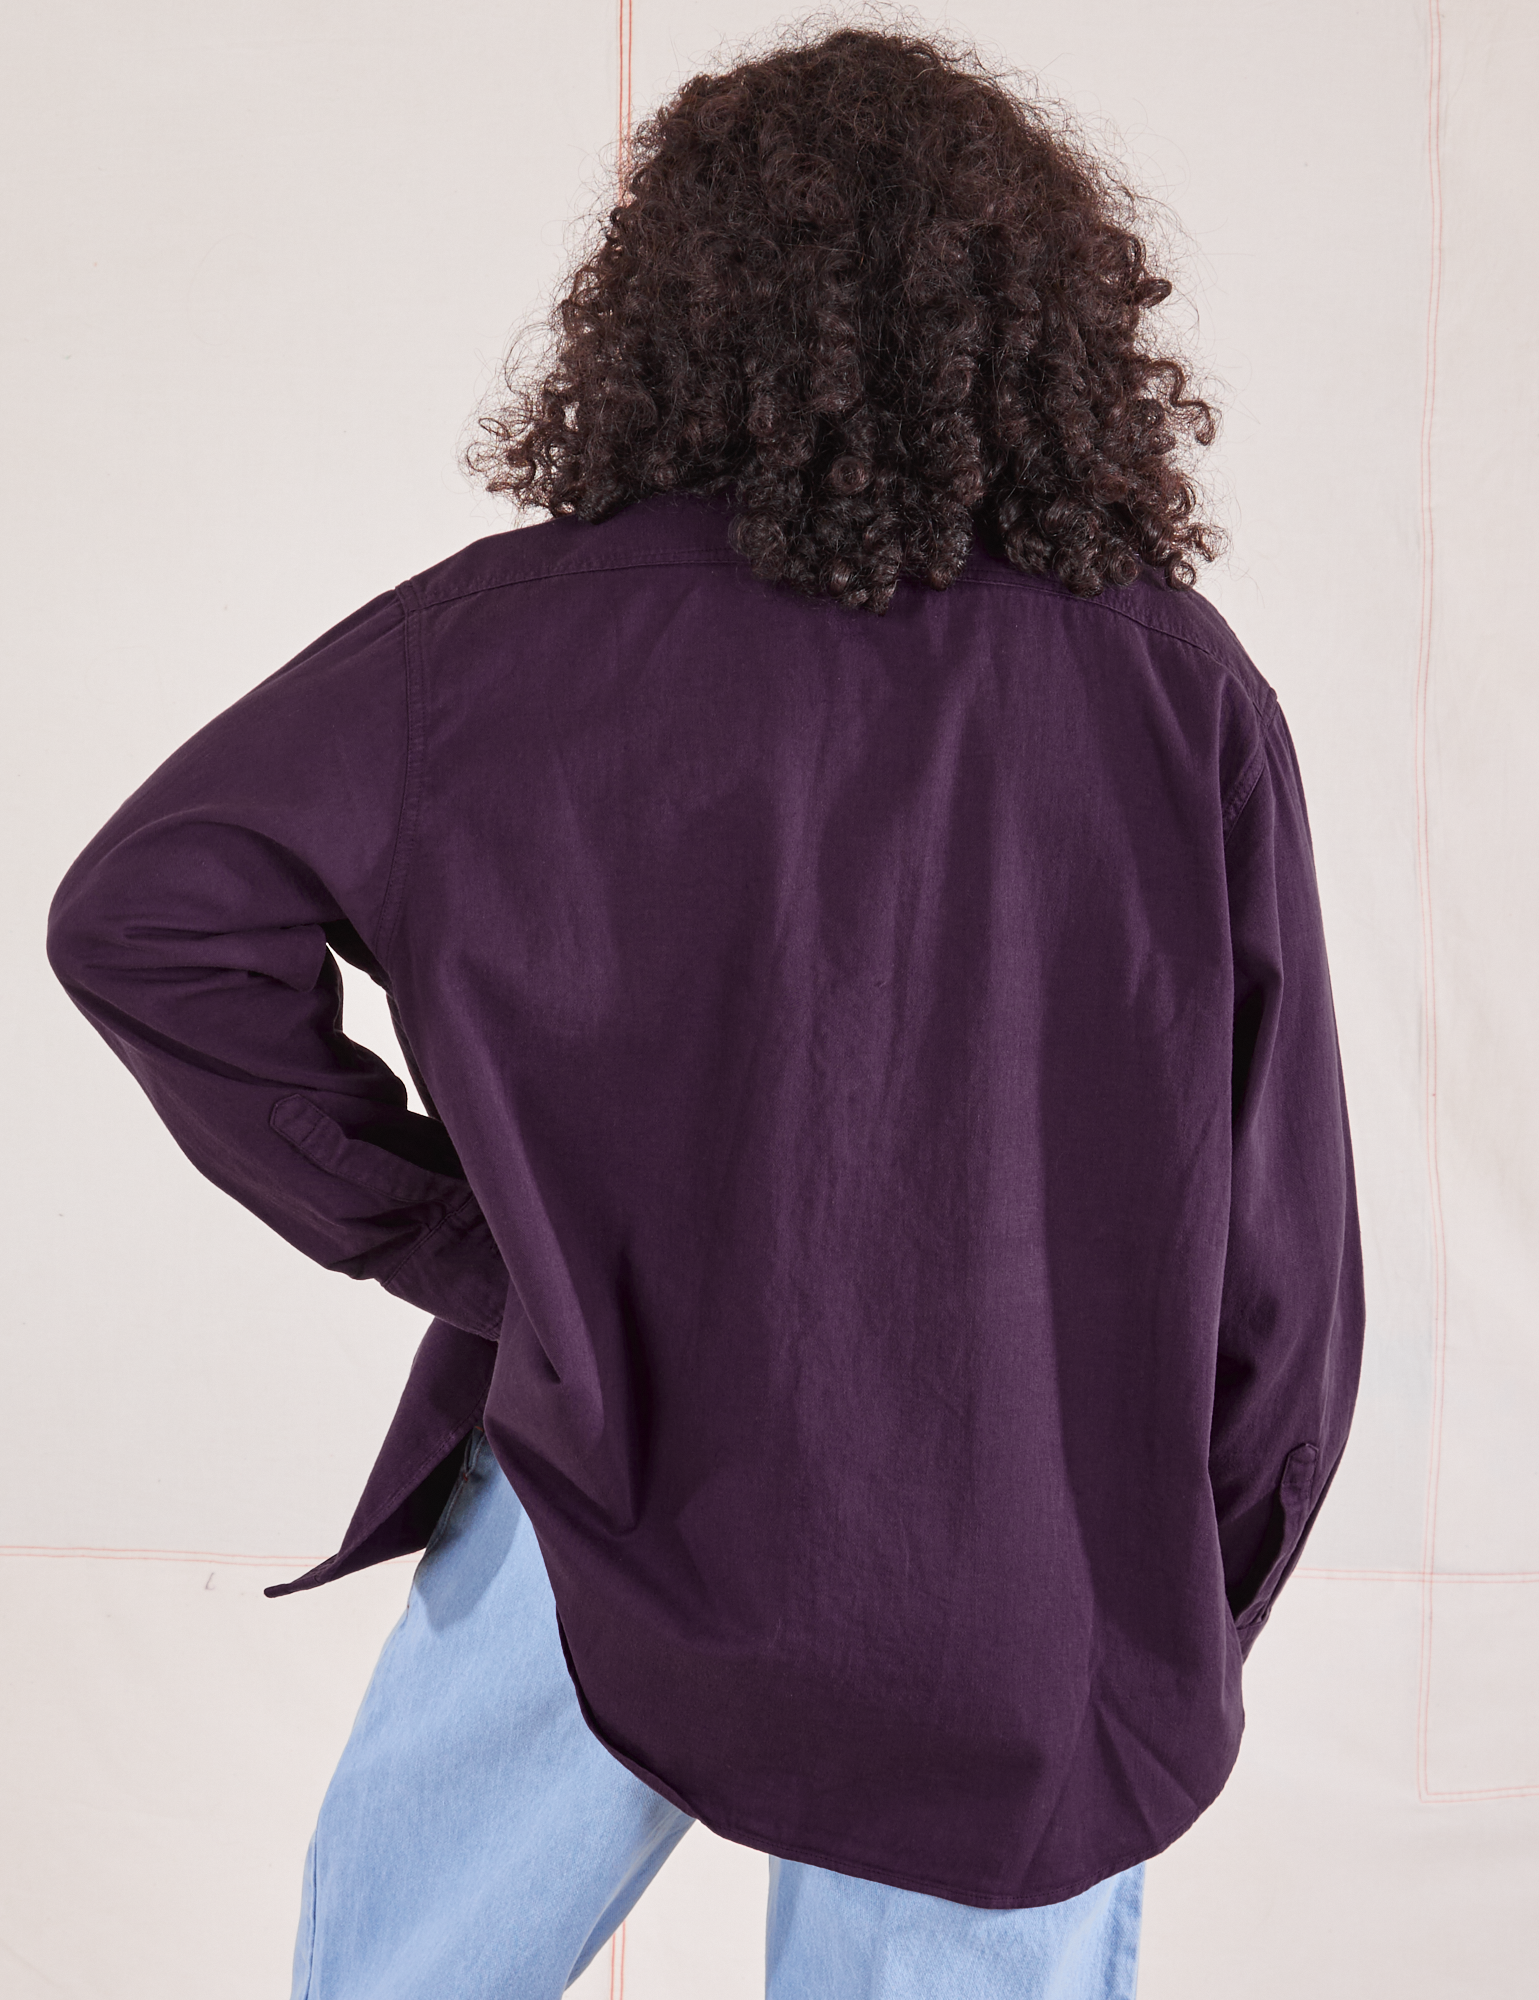 Oversize Overshirt in Nebula Purple back view on Jesse